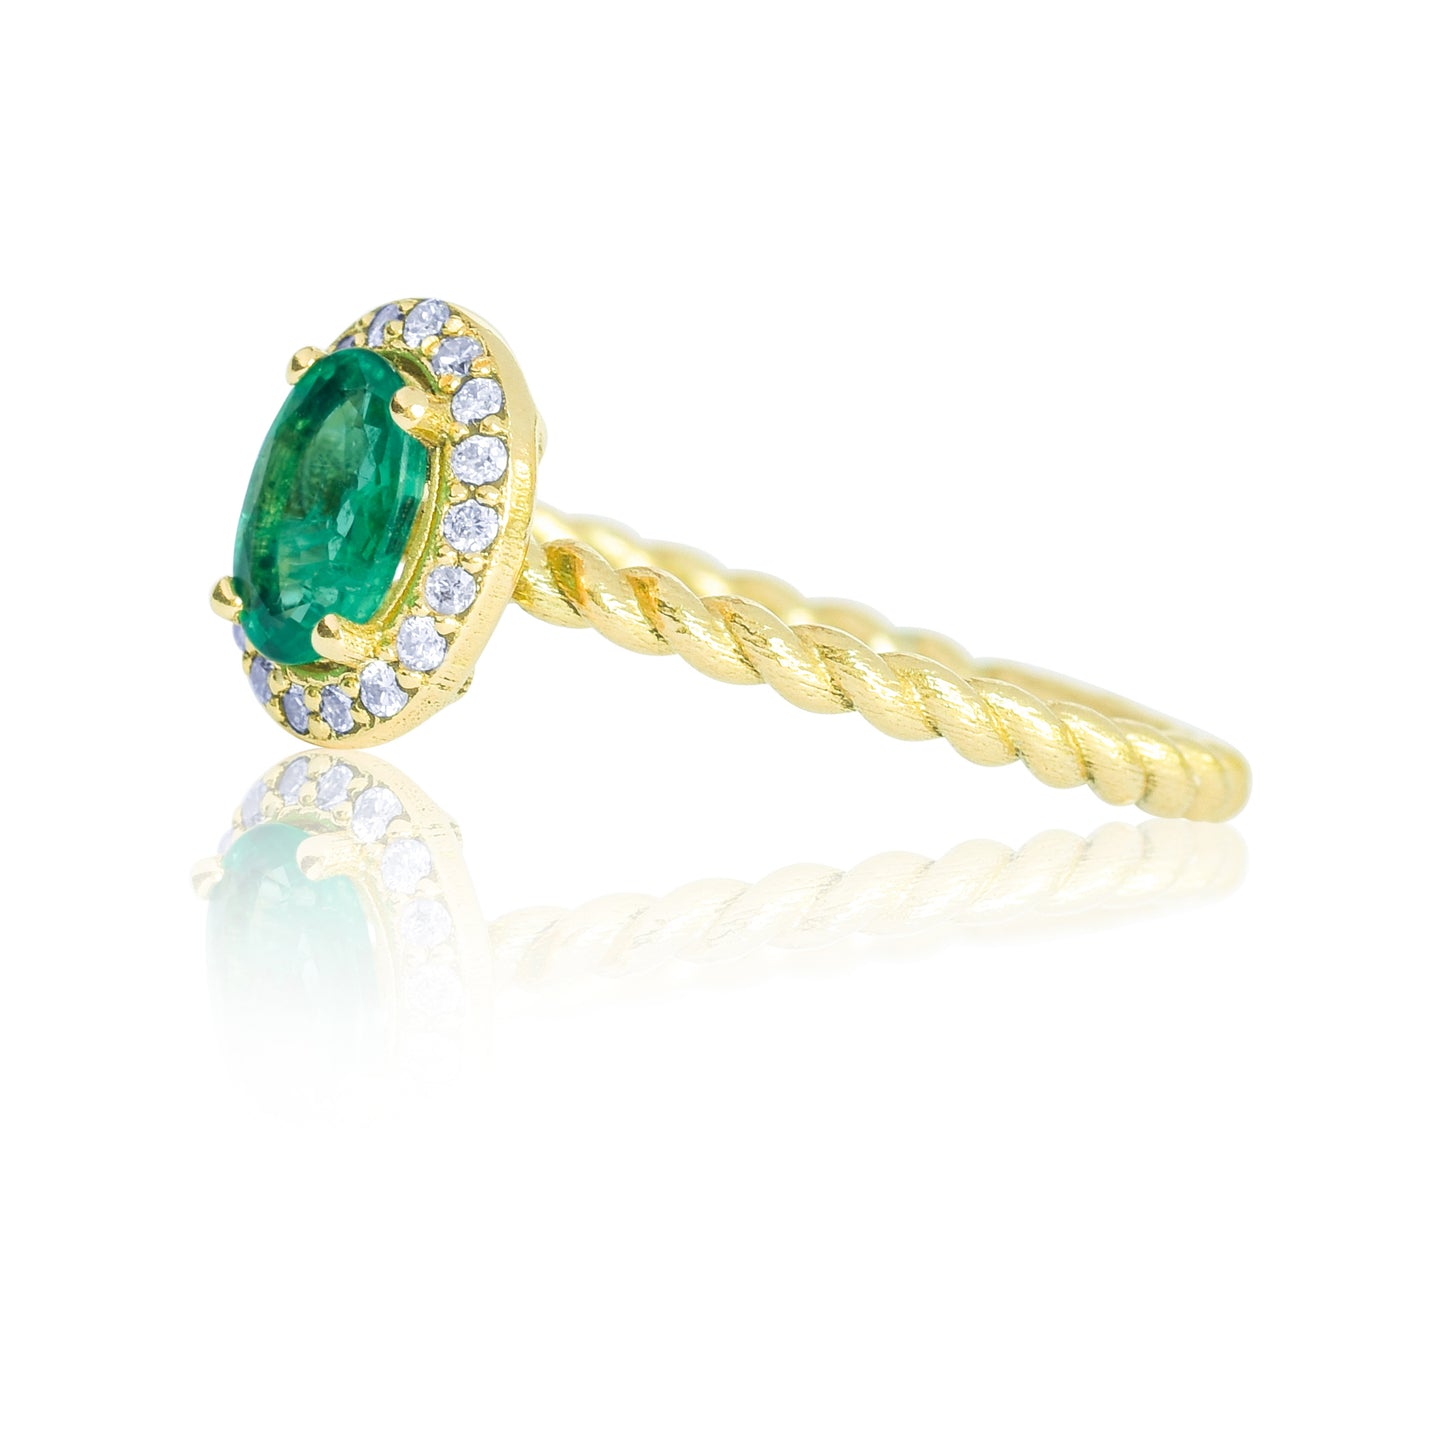 Iris, 18 carat yellow gold set with emerald and natural white diamonds